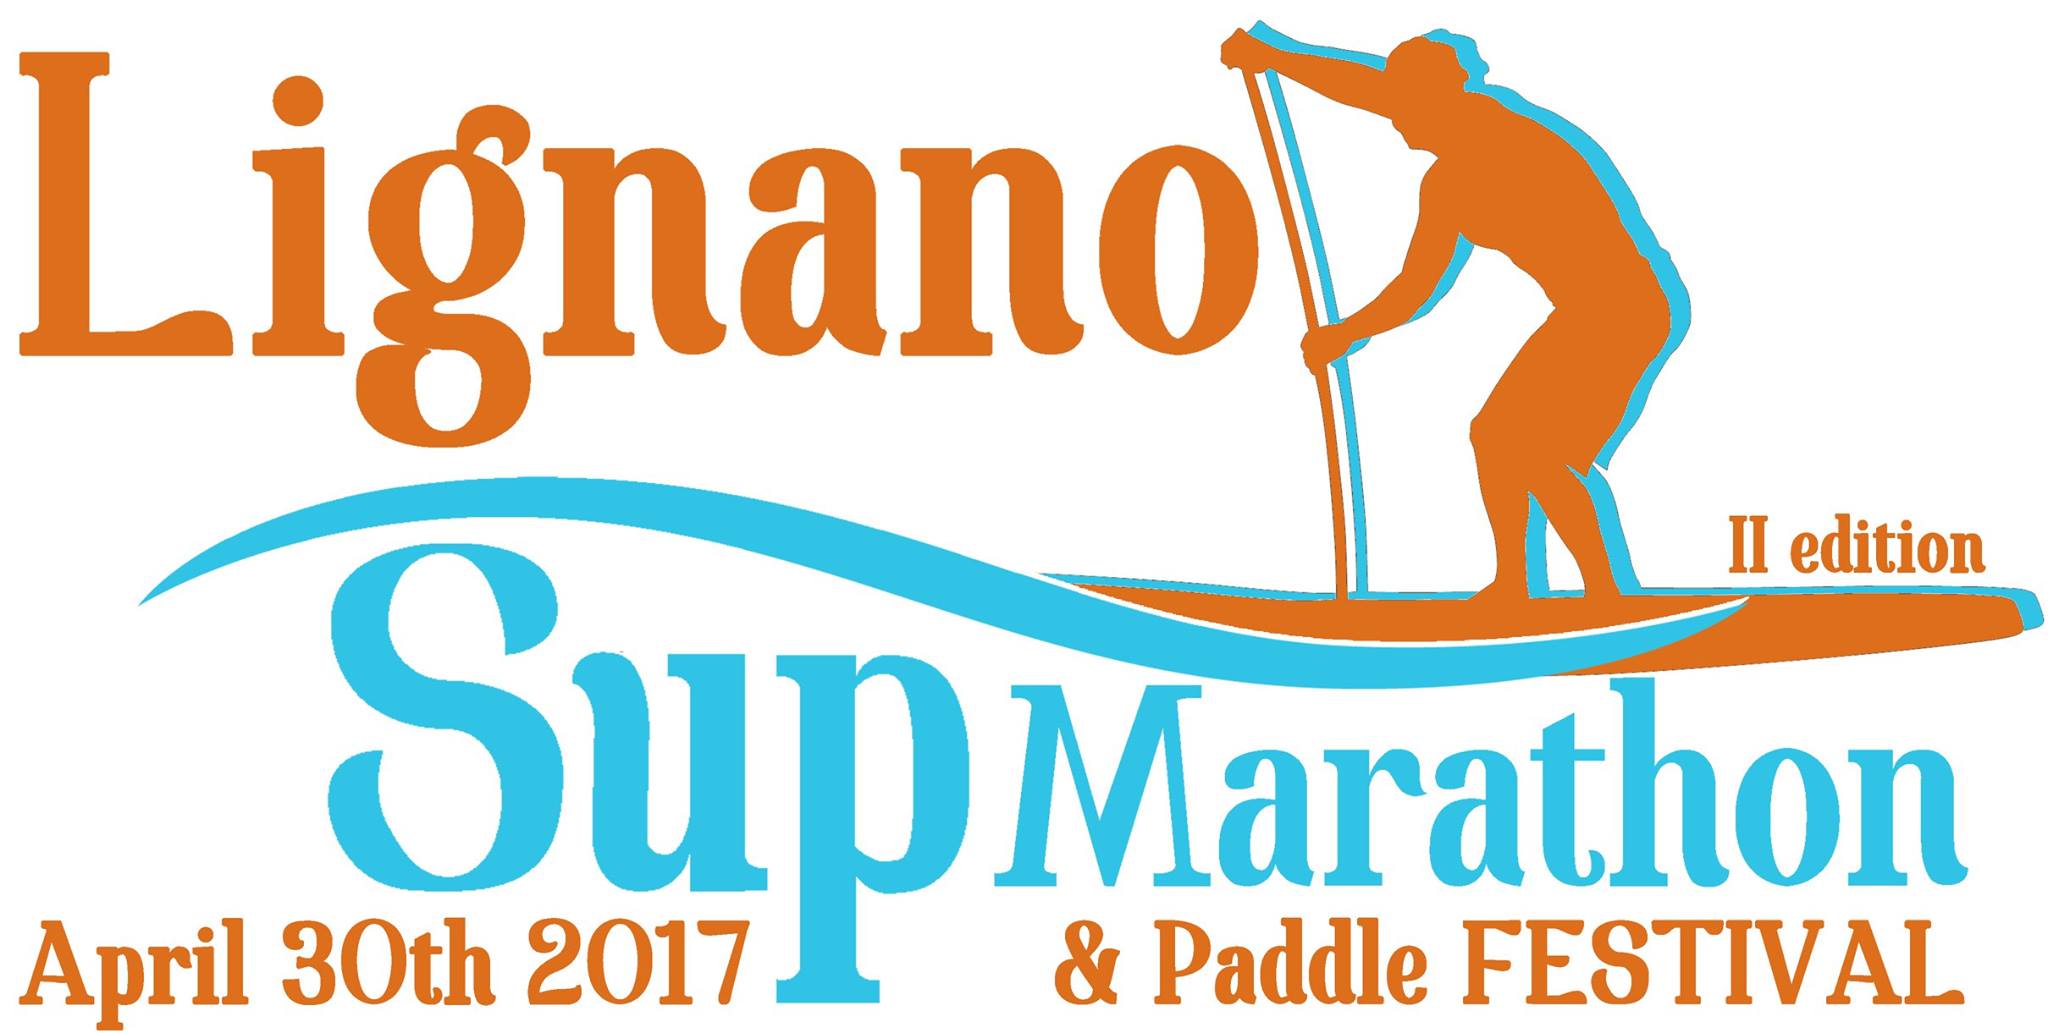 Sup-news-italia-2017-lignano-sup-marathon-04